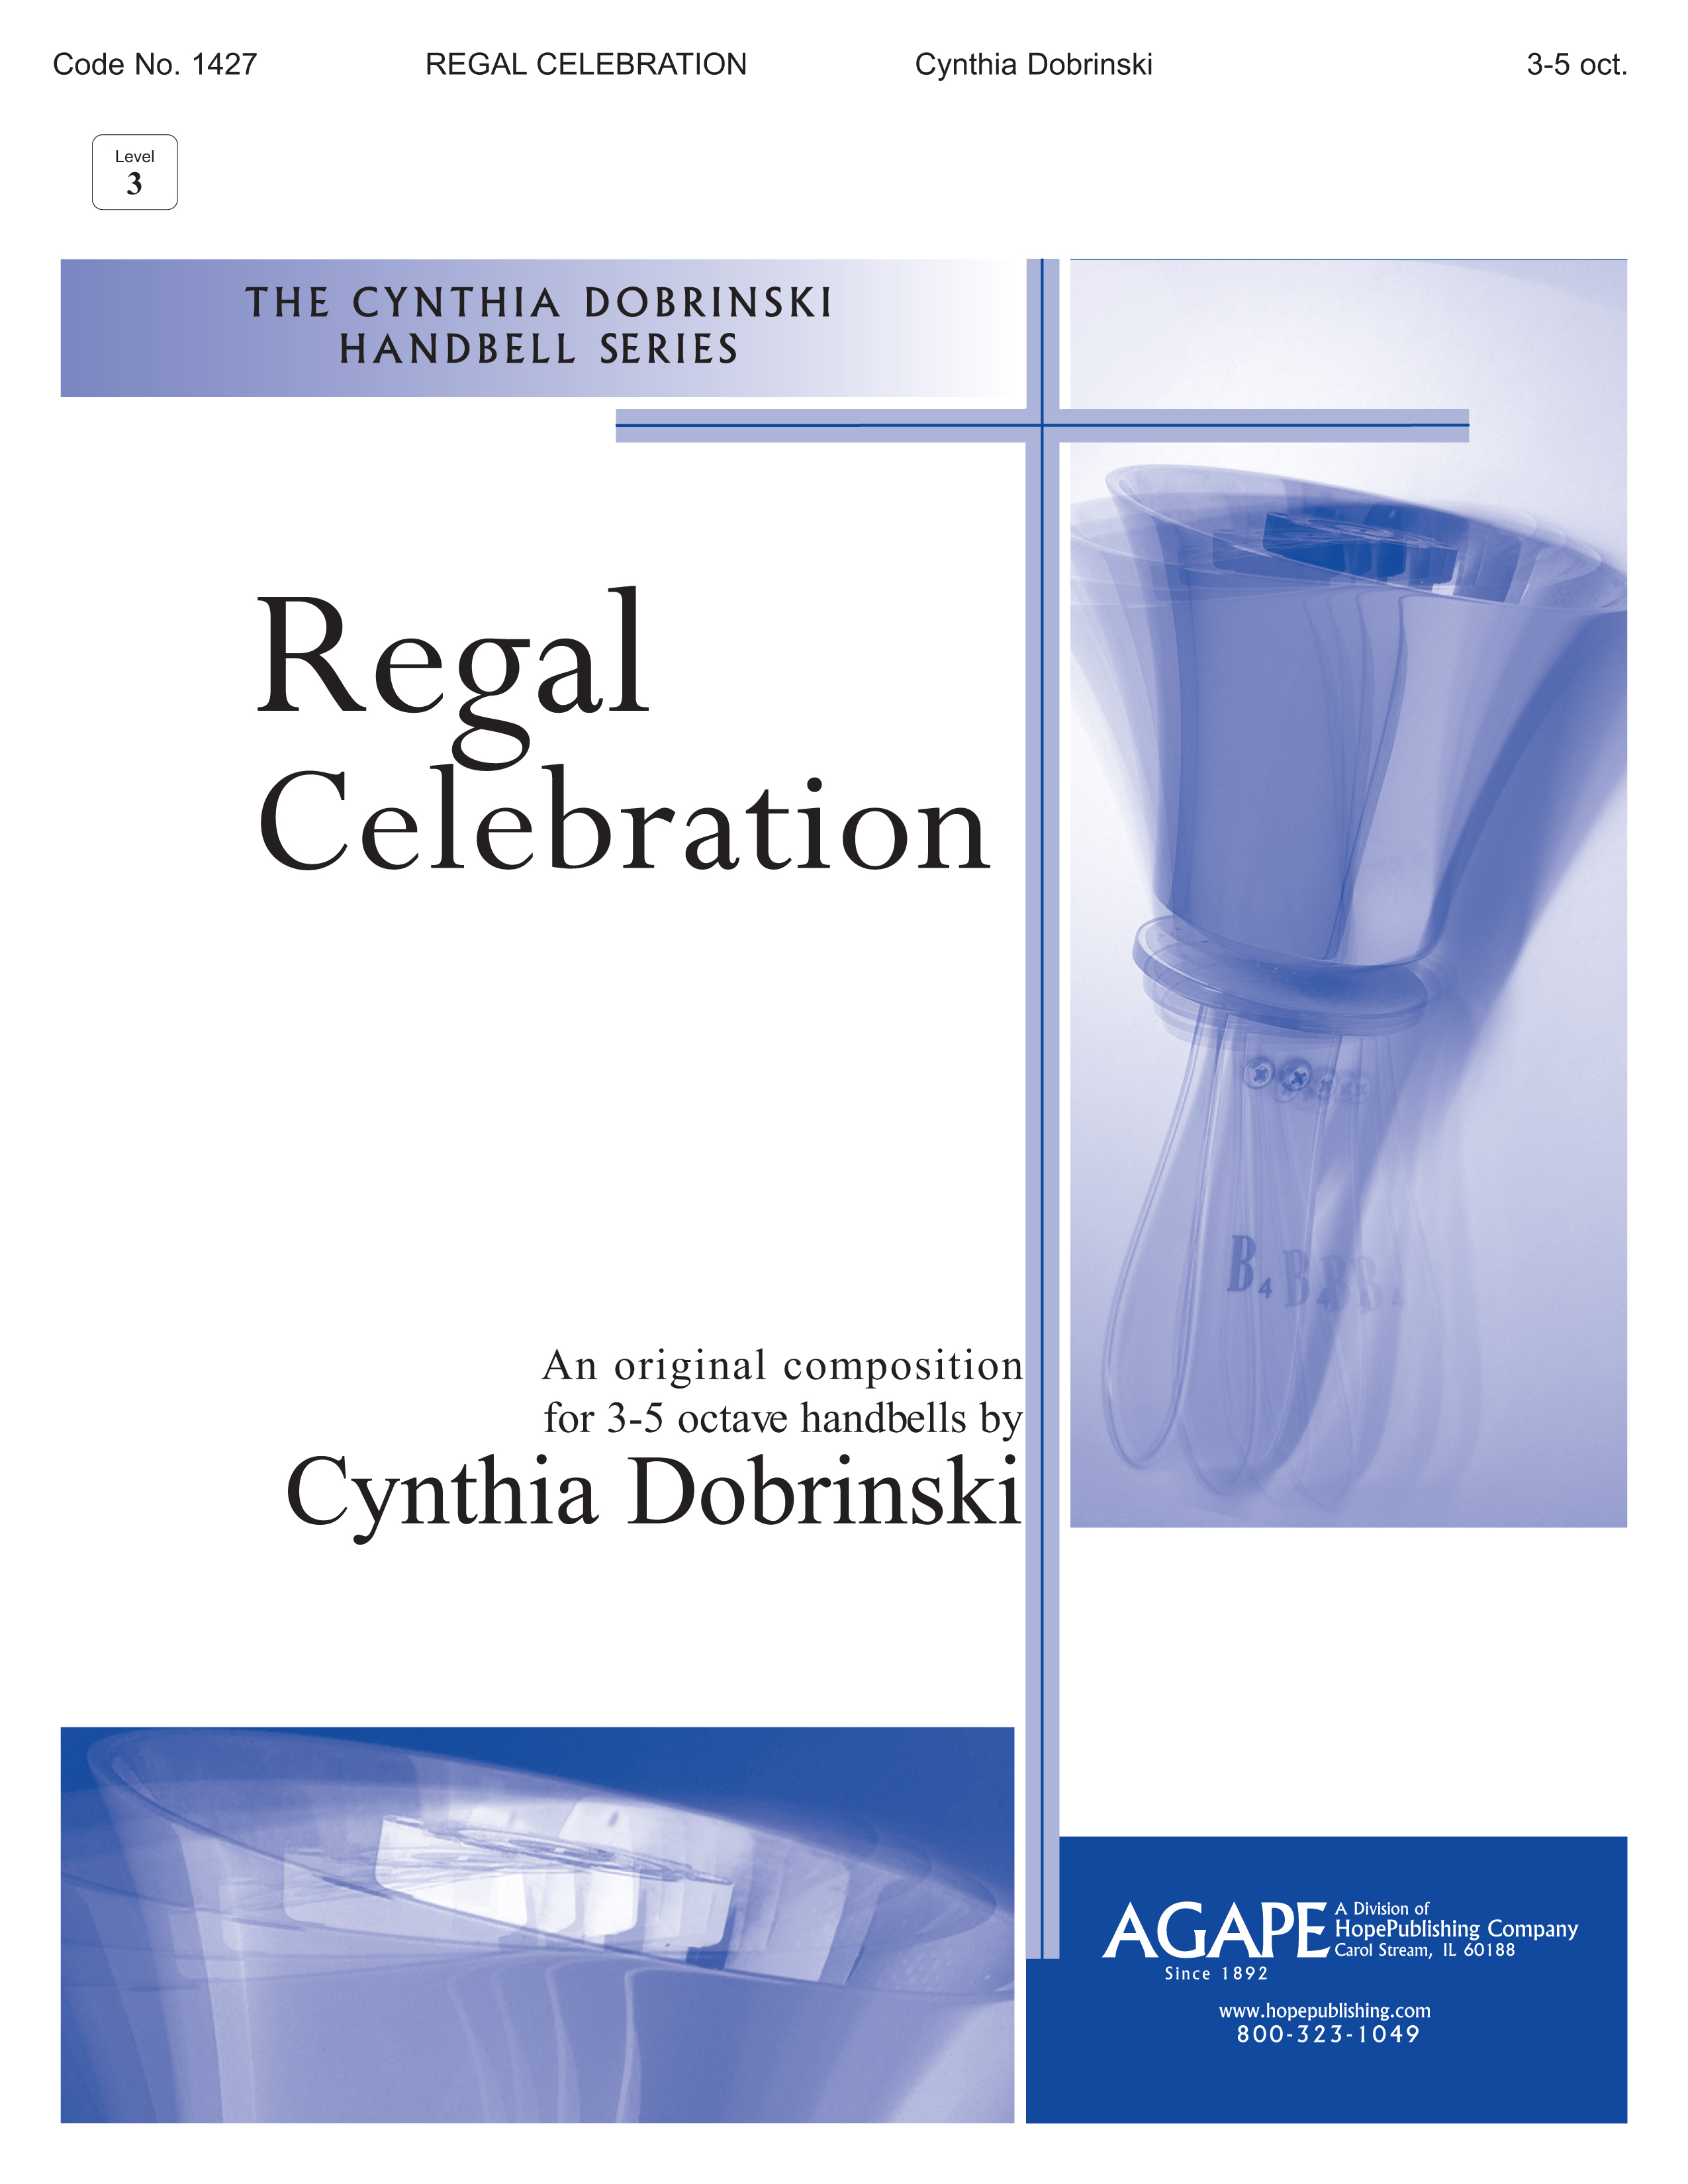 Regal Celebration Cover Image